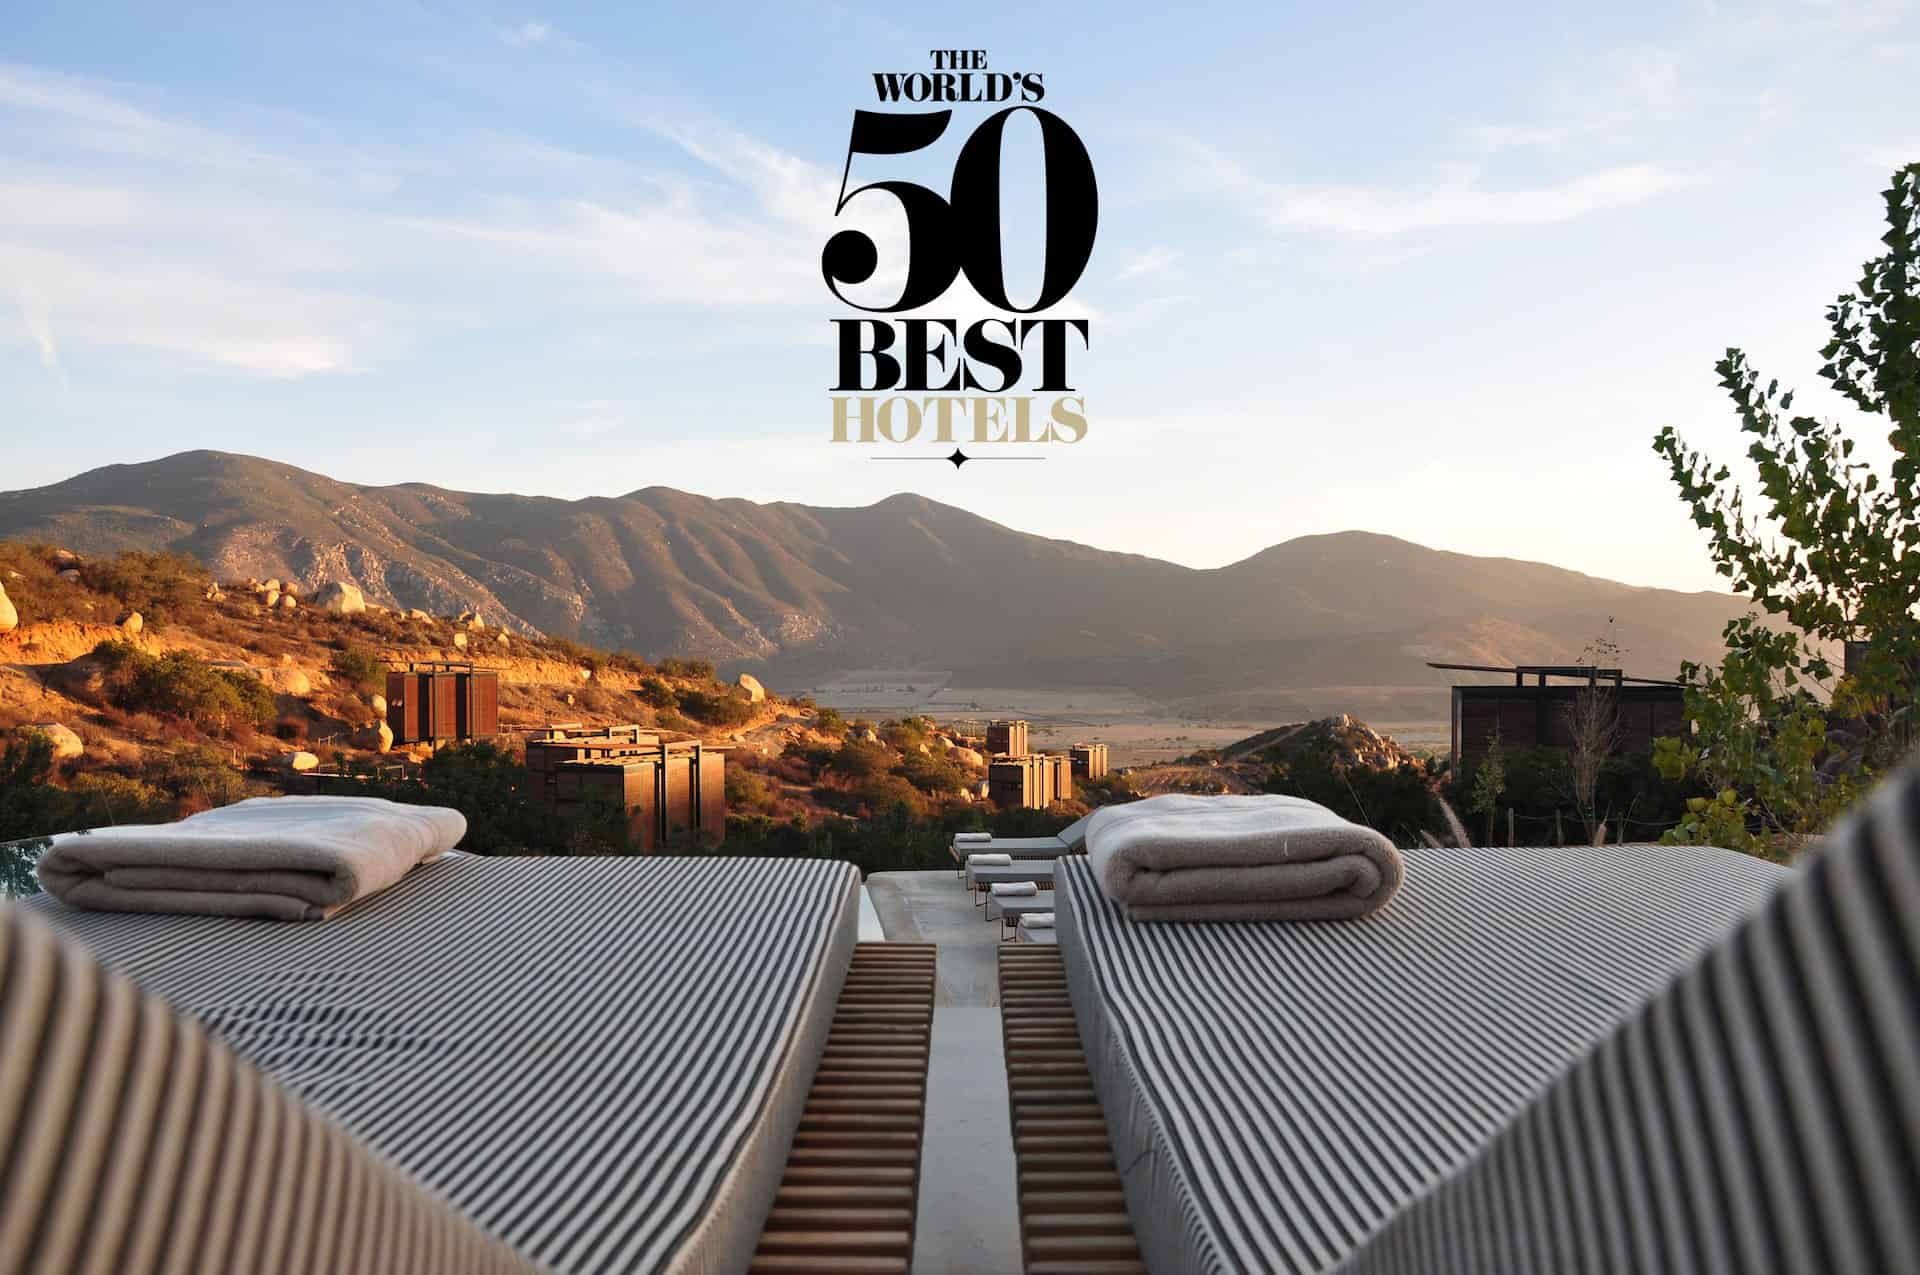 50-best-hotels-manuel-moreno-DGa0LQ0yDPc-unsplash